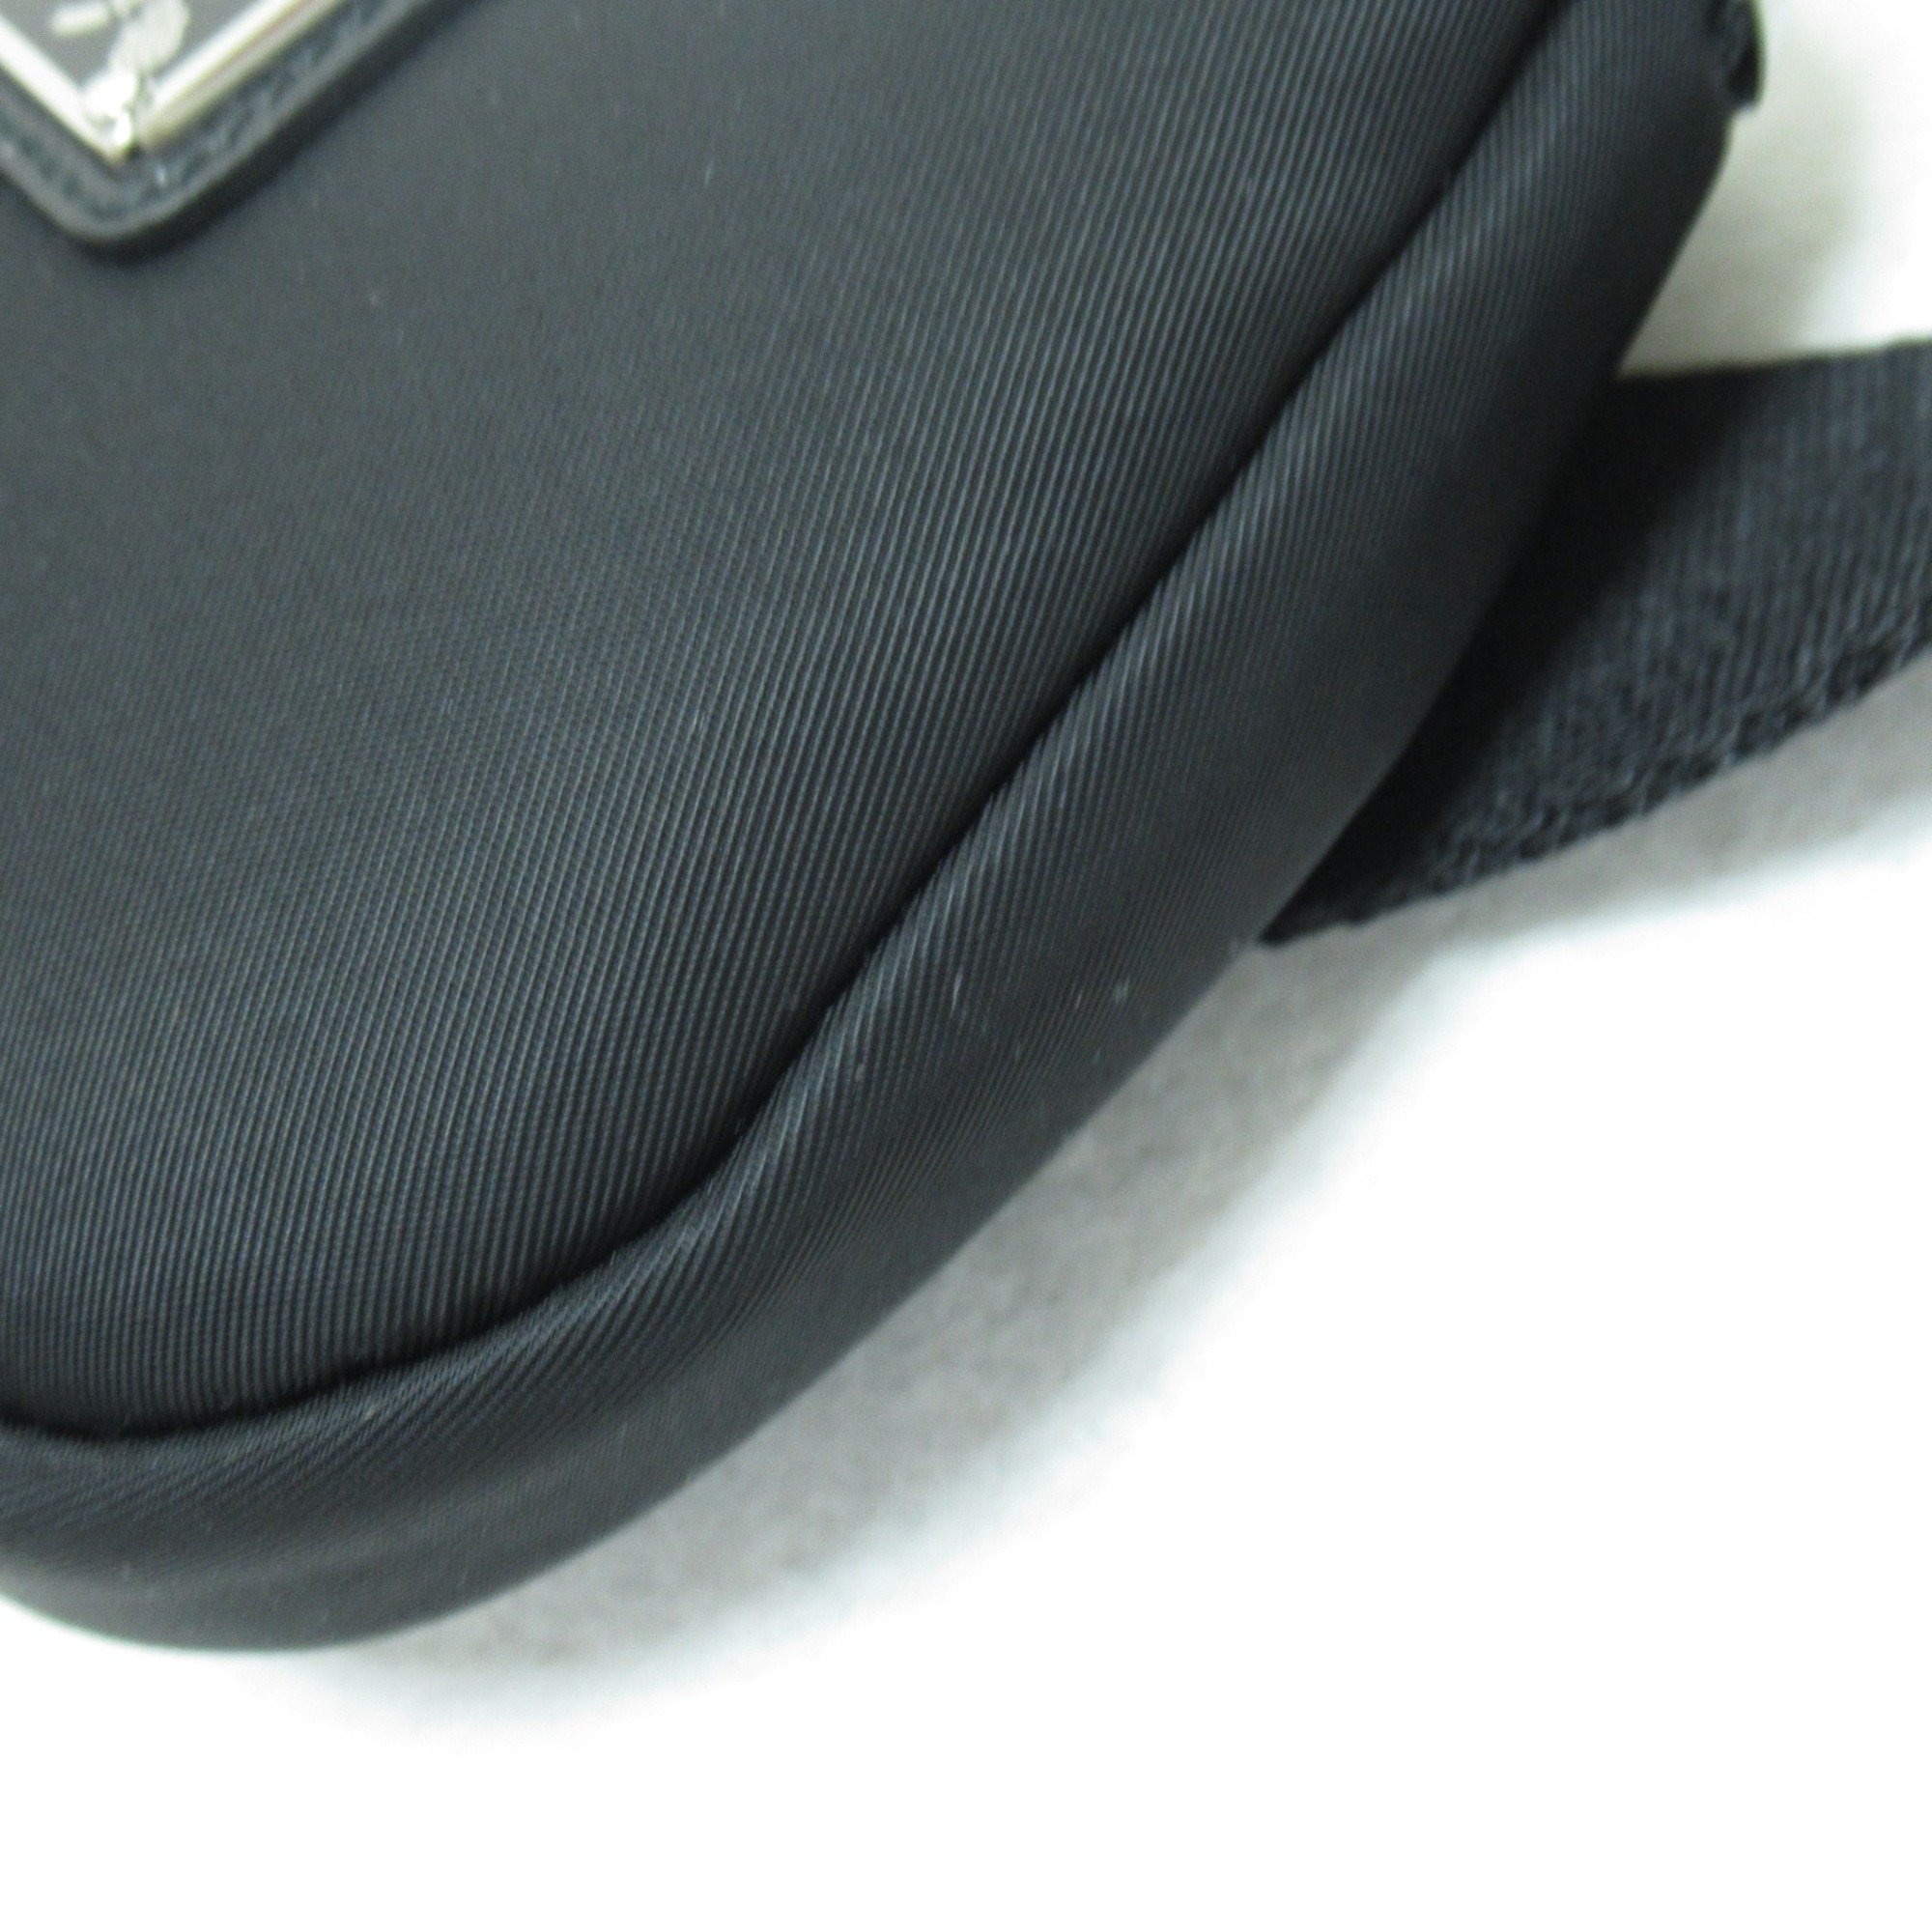 PRADA belt with pouch Black polyester polyamide 1CN0872DMNF000280